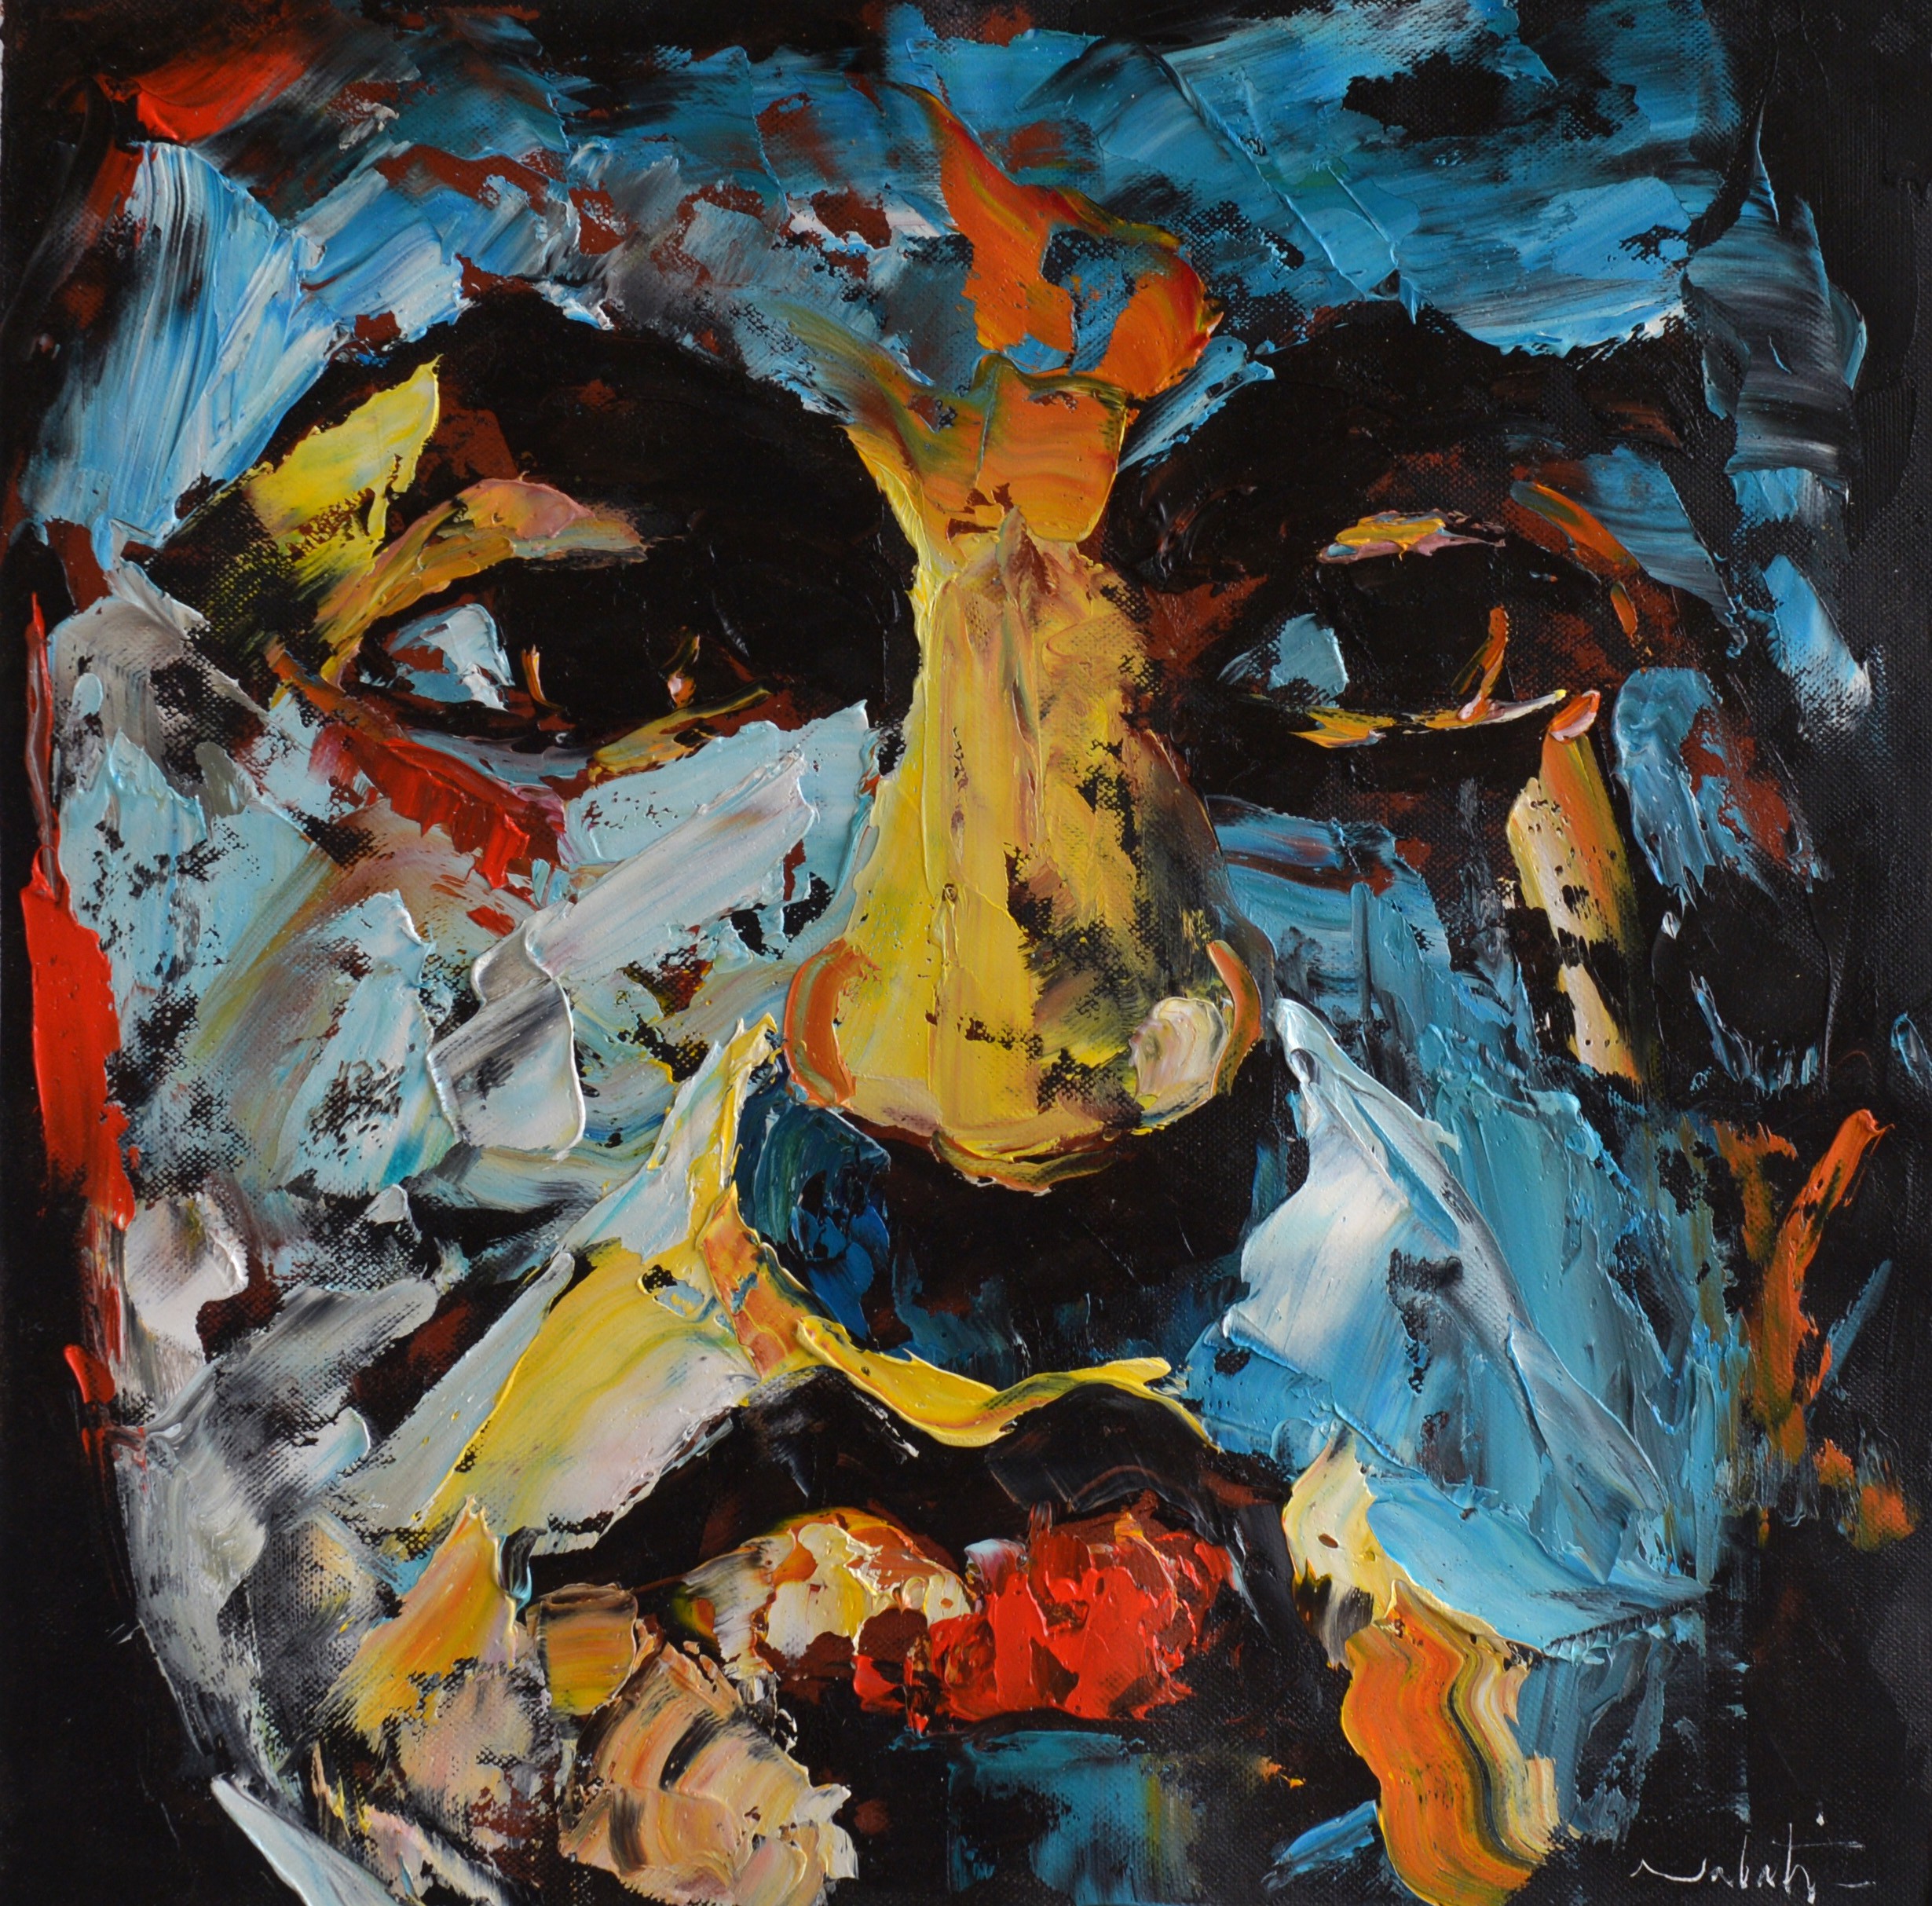 Portrait 16 by Shahram Nabati, 2015 | Painting | Artsper